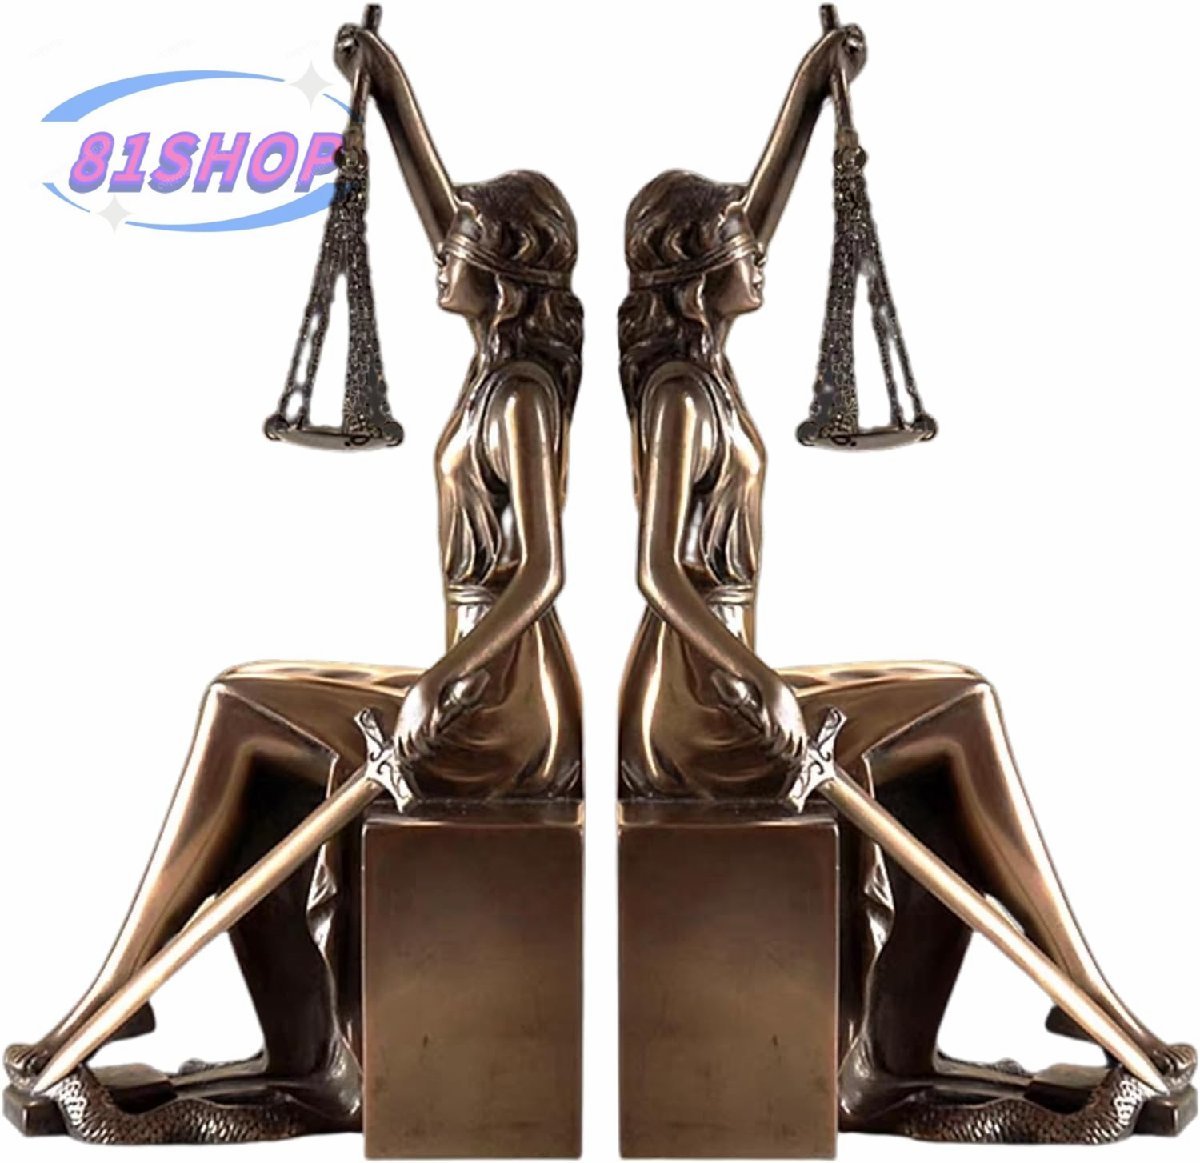 「81SHOP」正義と力の象徴 正義の女神 ブックスタンド 彫刻 彫像 西洋 雑貨 オブジェ 置物 フィギュリン 銅 樹脂 ハンドメイド 手作り 2点_画像1